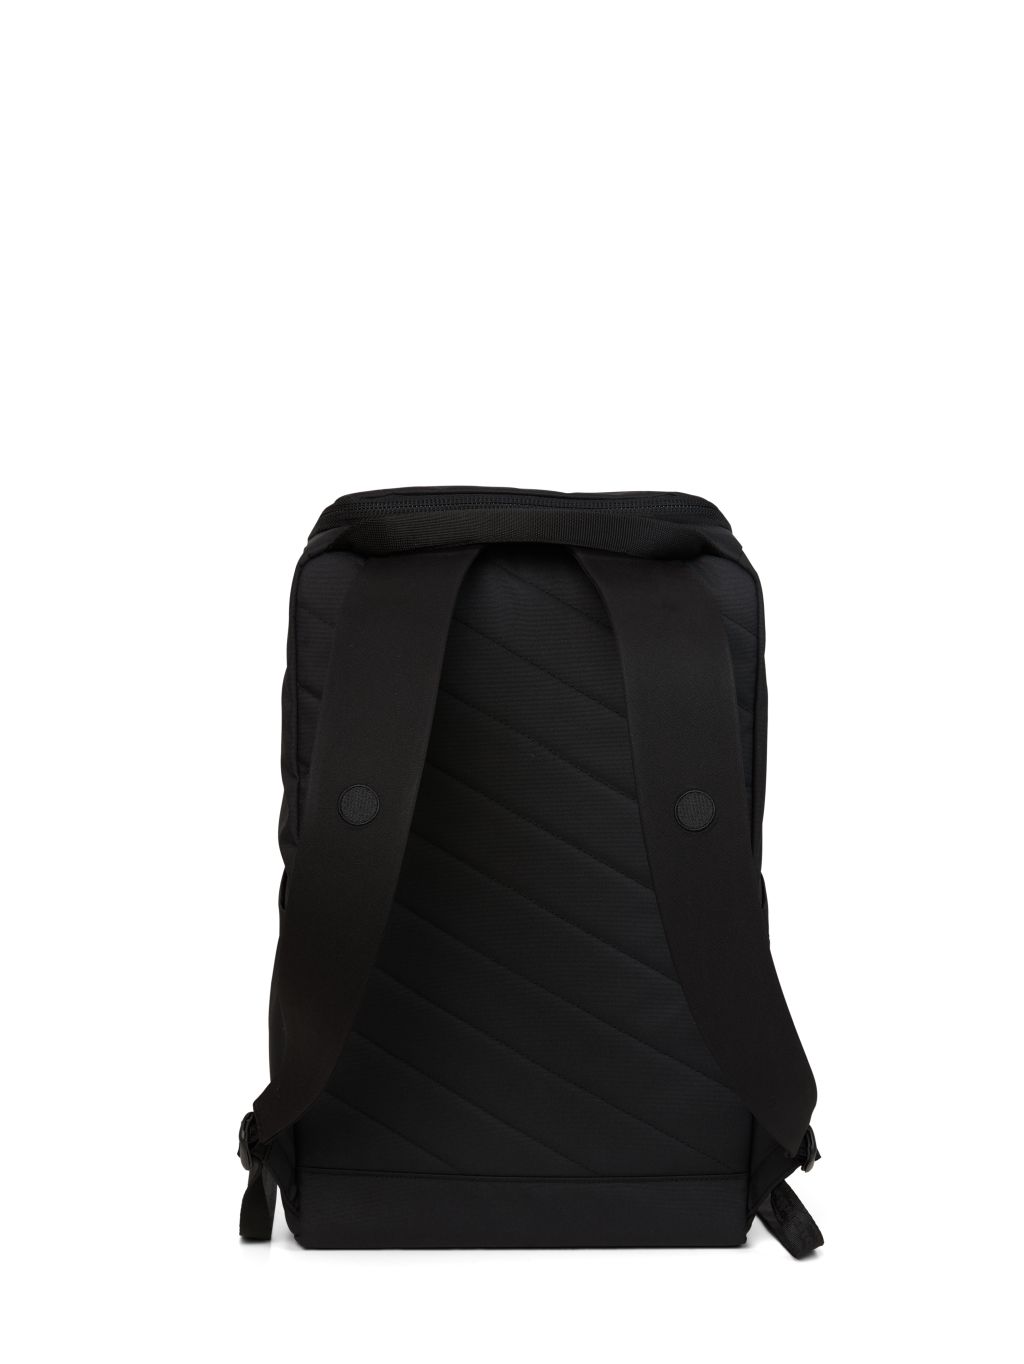 PURIK Backpack rooted black